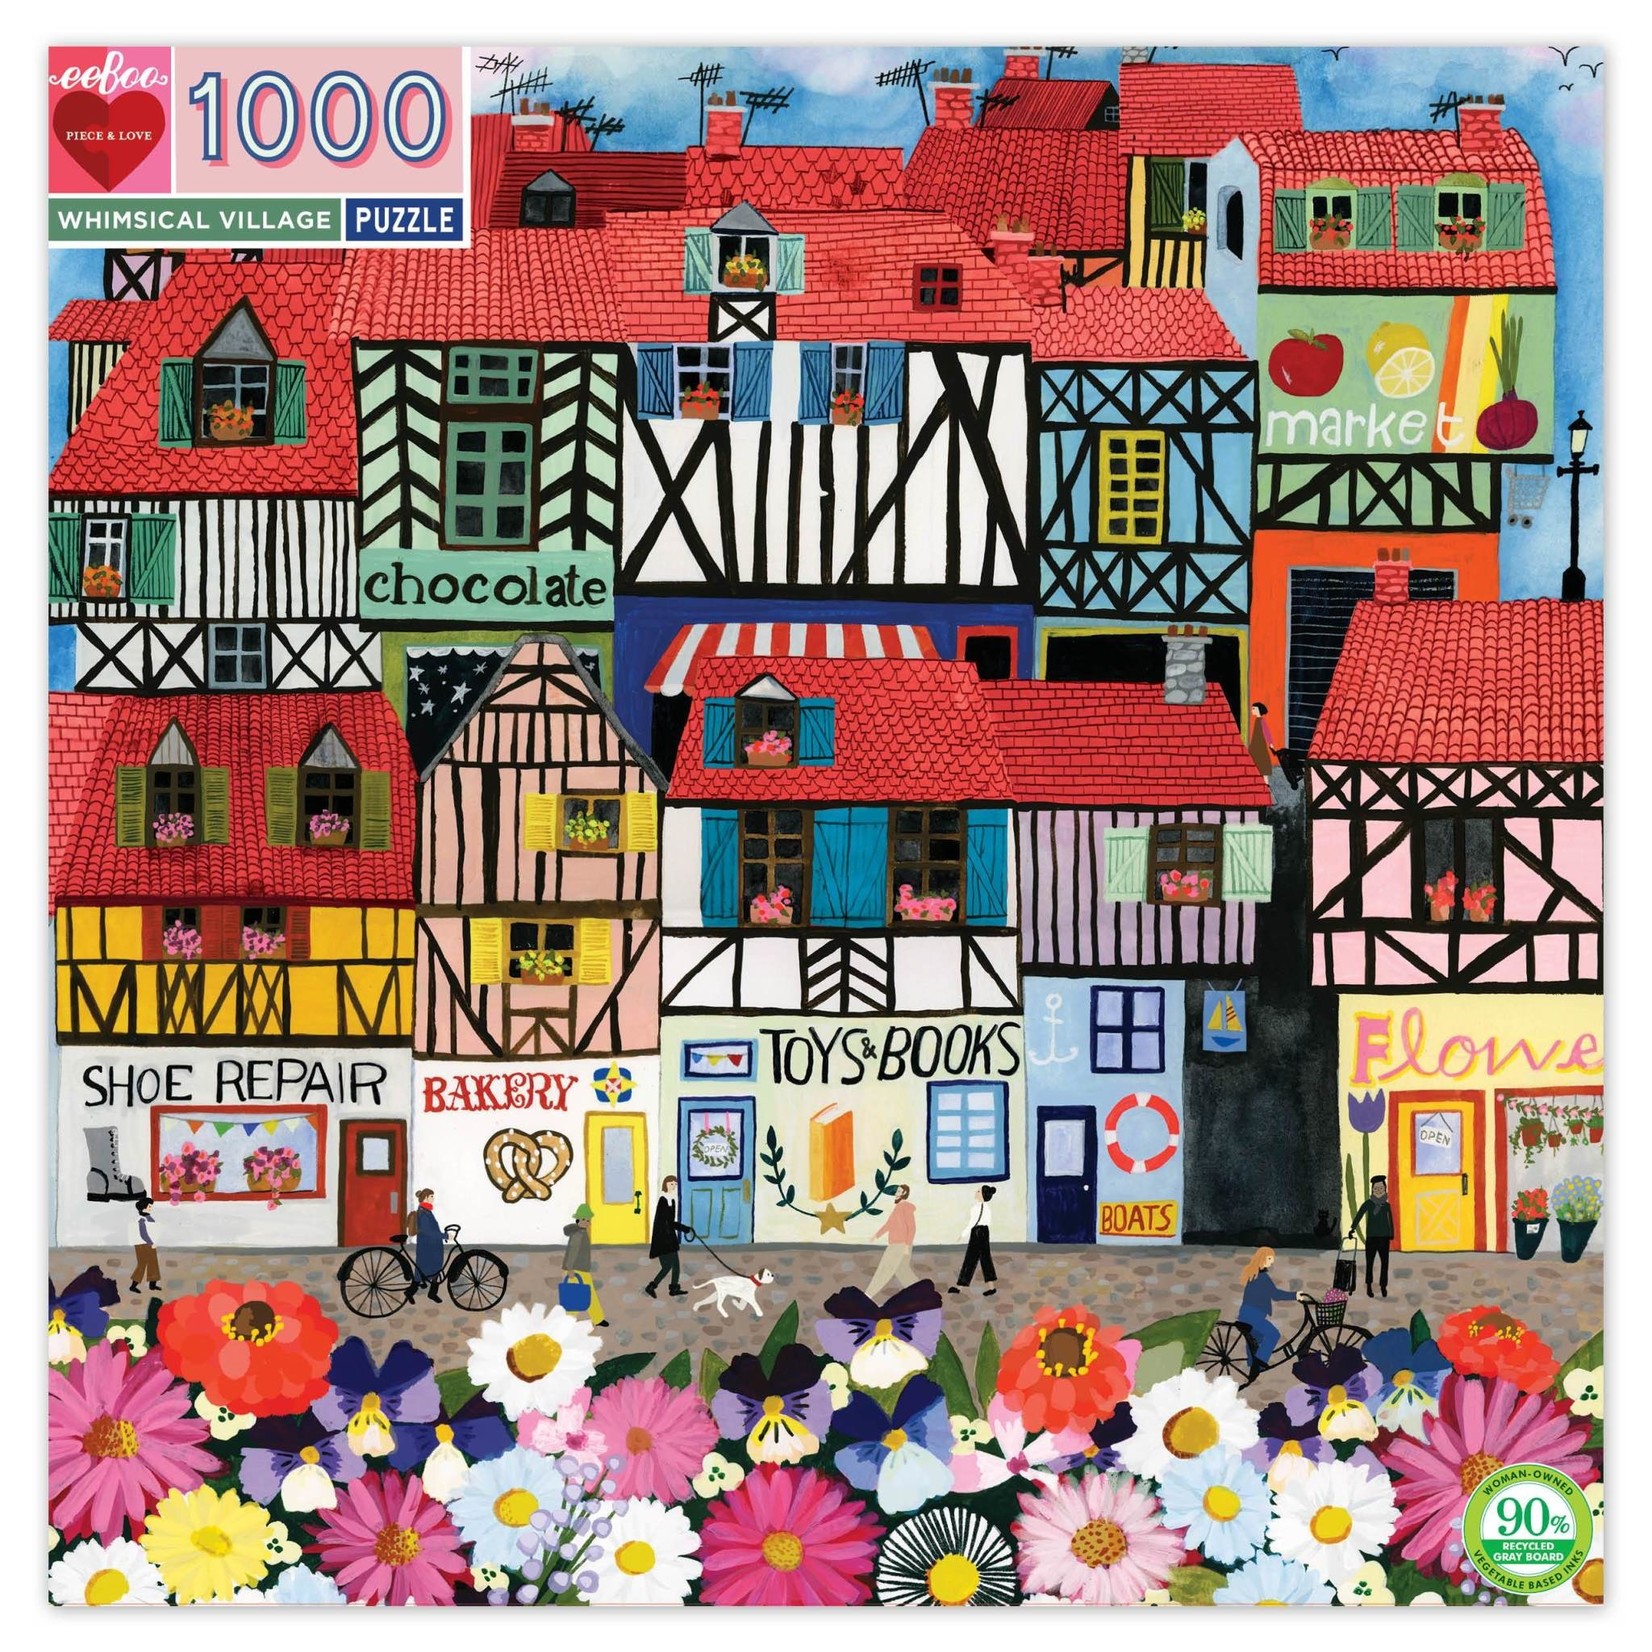 Eeboo Whimsical Village - 1000 Piece Jigsaw Puzzle